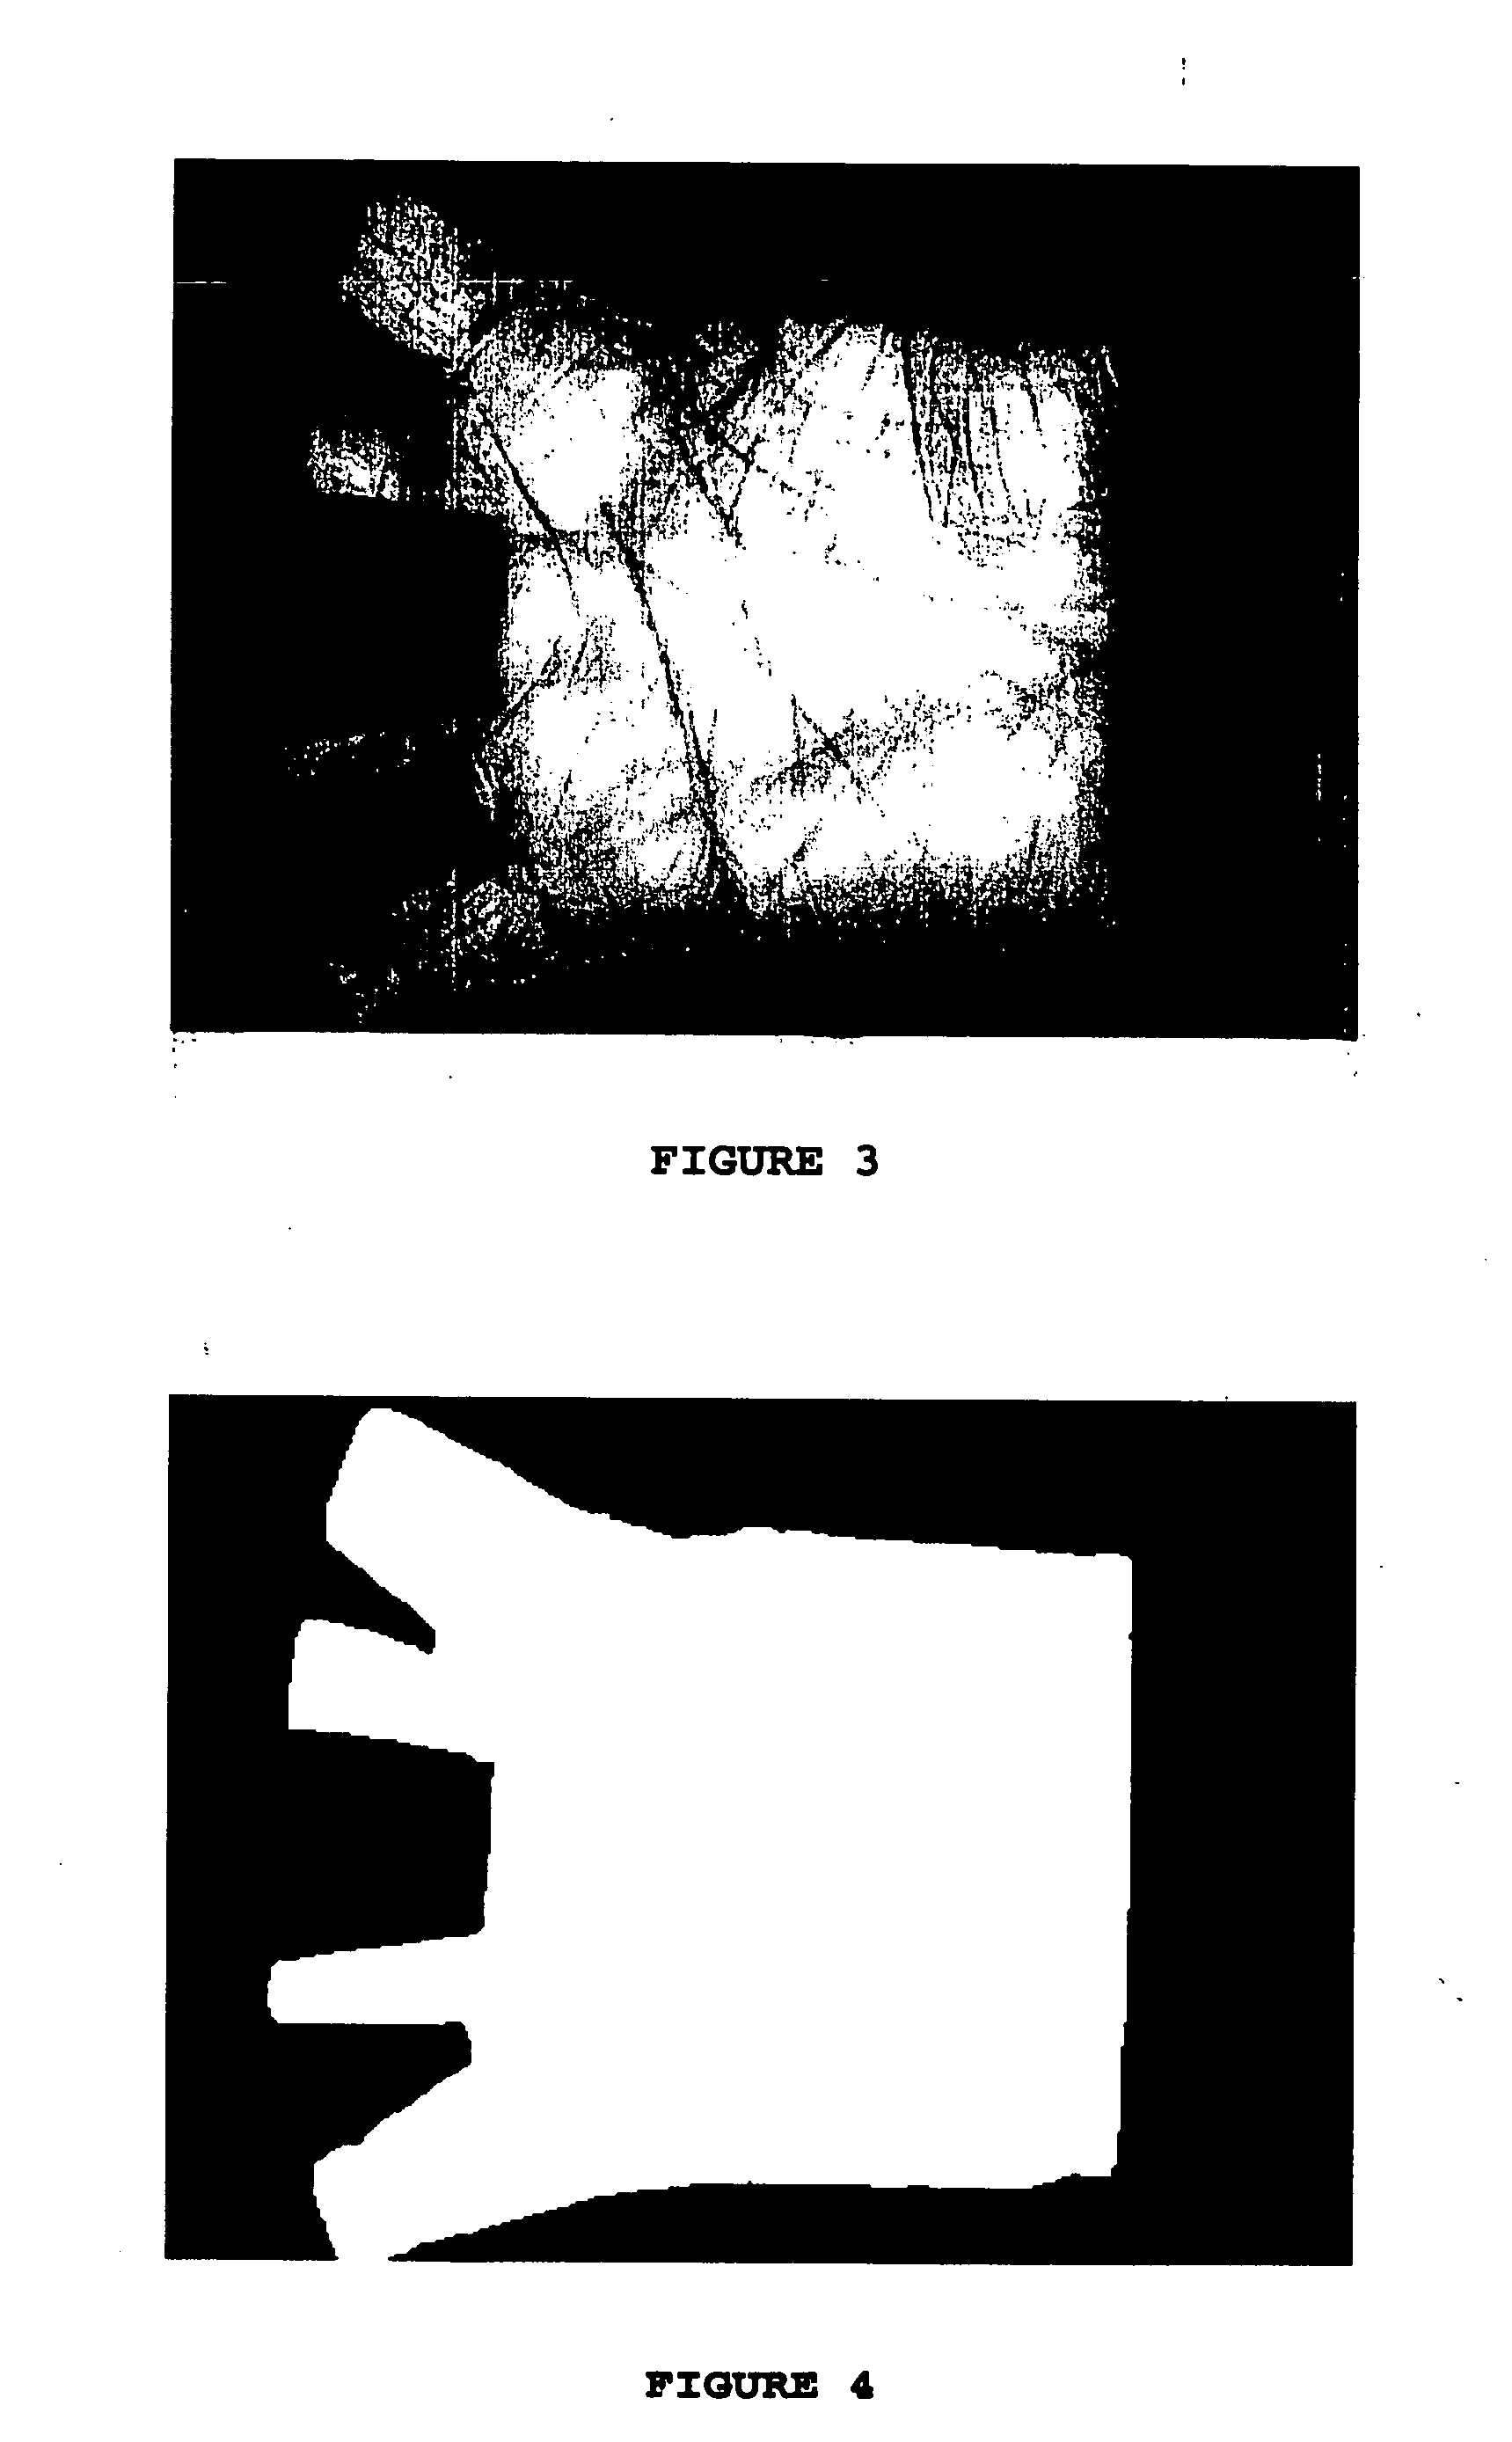 Method of palm print identification